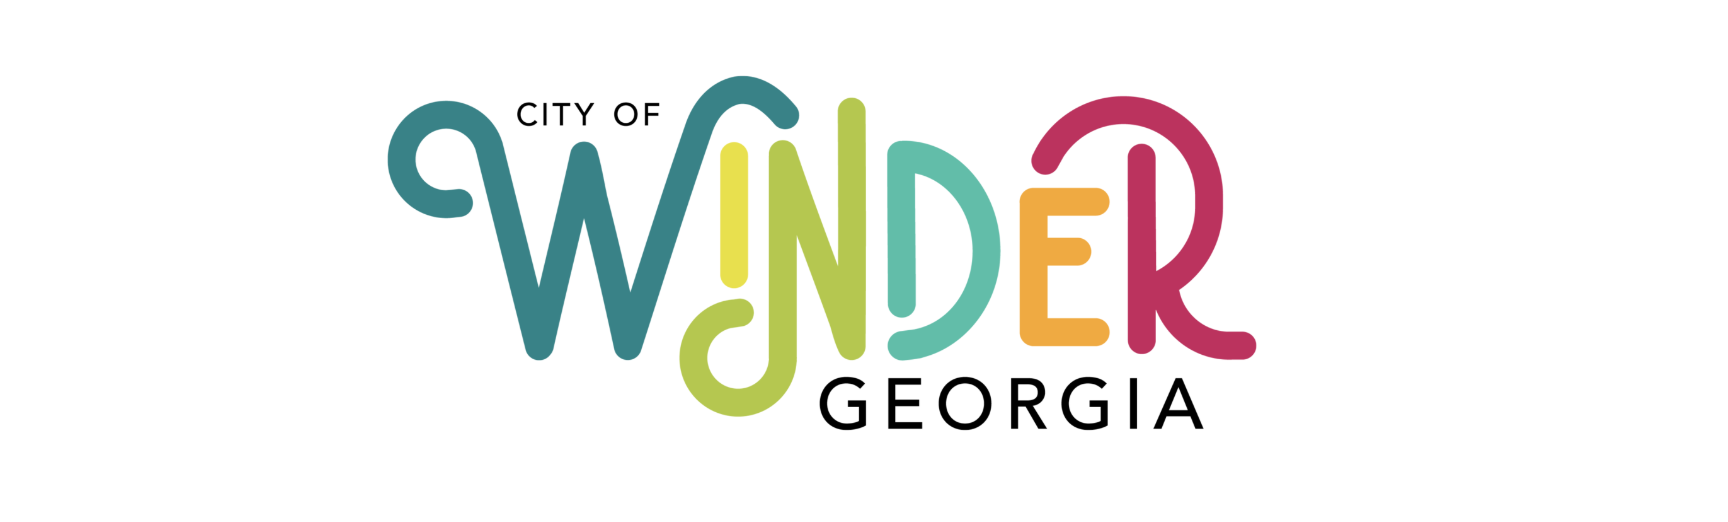 City of Winder logo